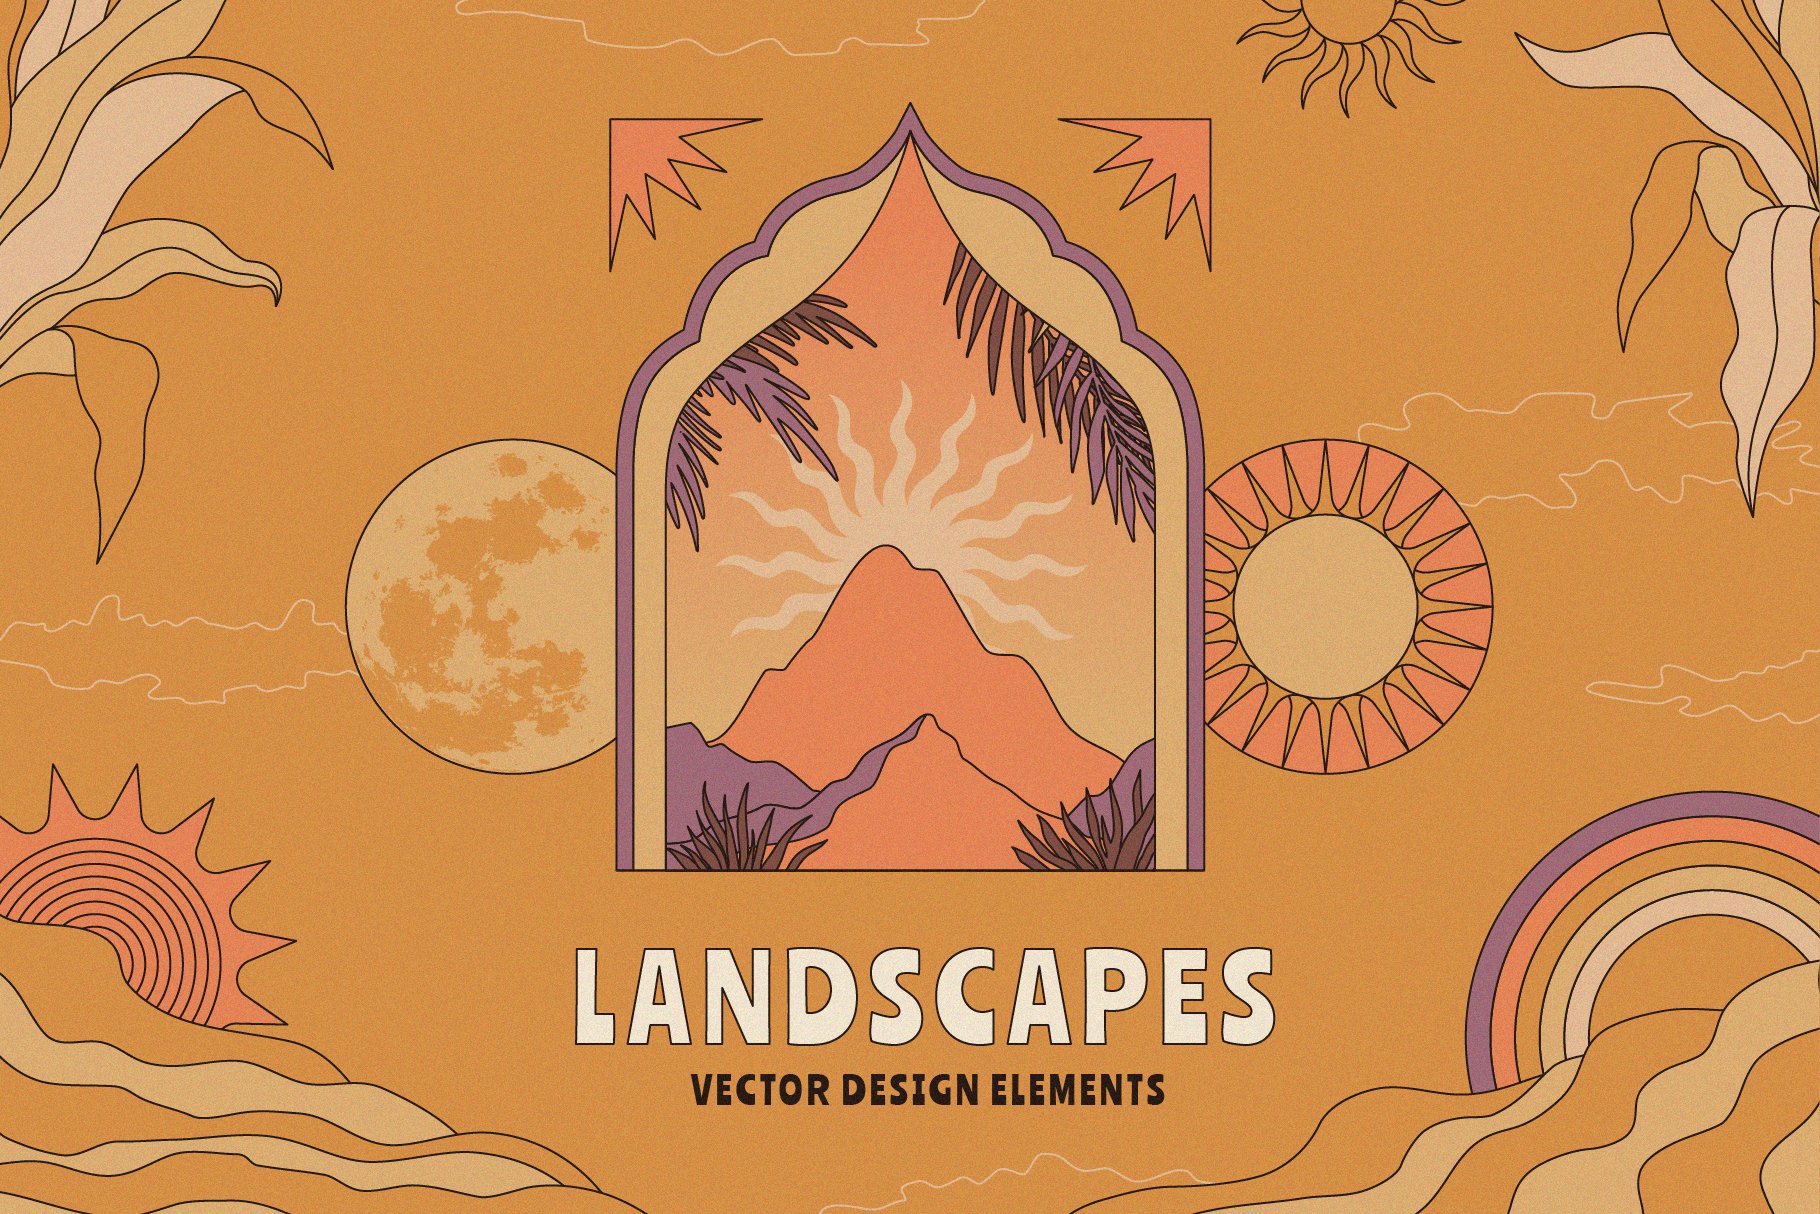 Landscapes - vector design elements cover image.